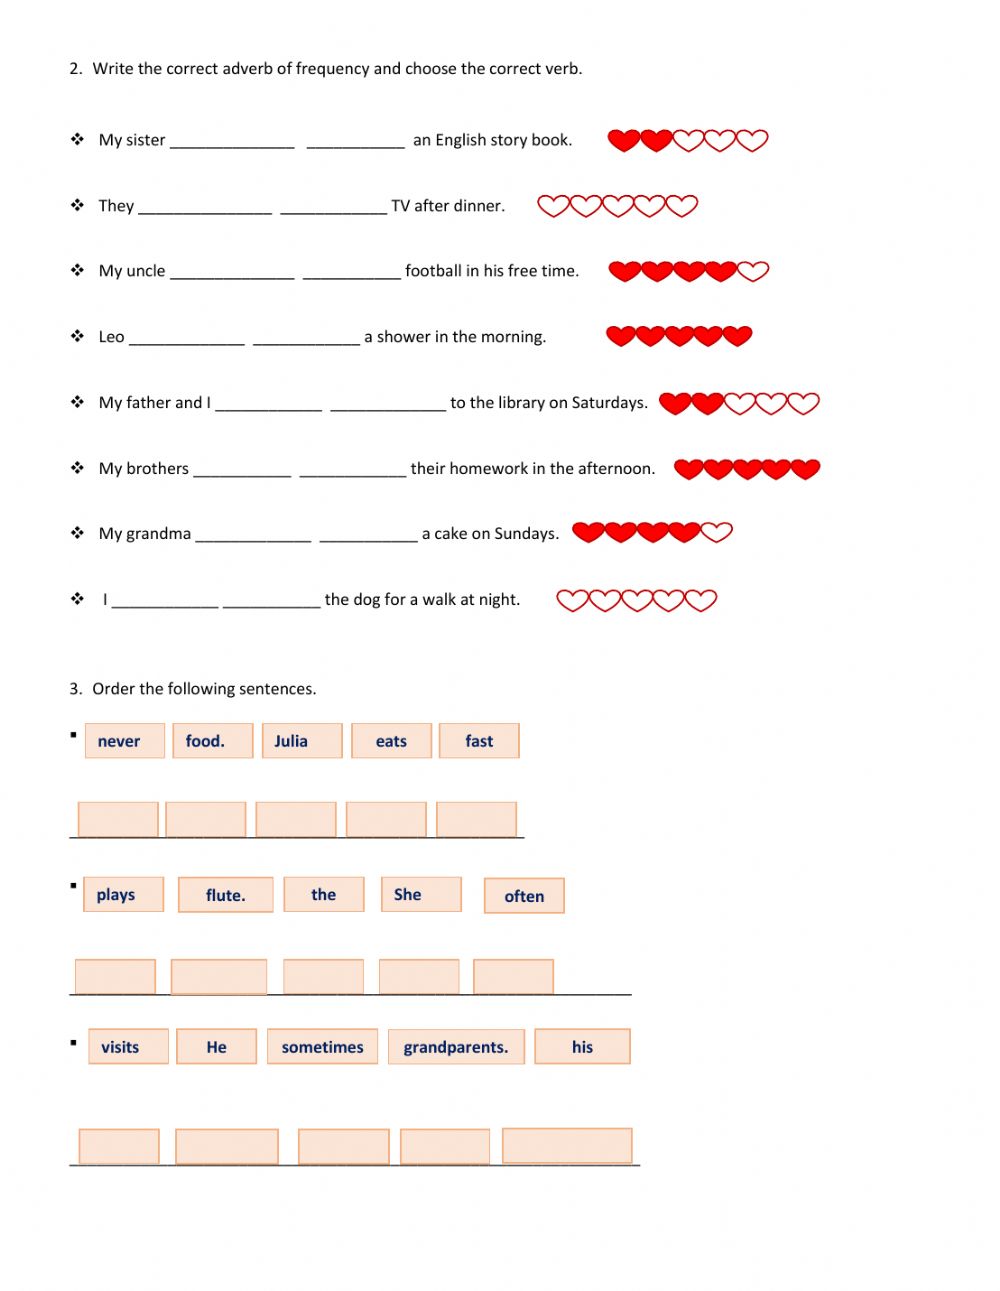 adverbs-of-possibility-exercises-pdf-winlopma